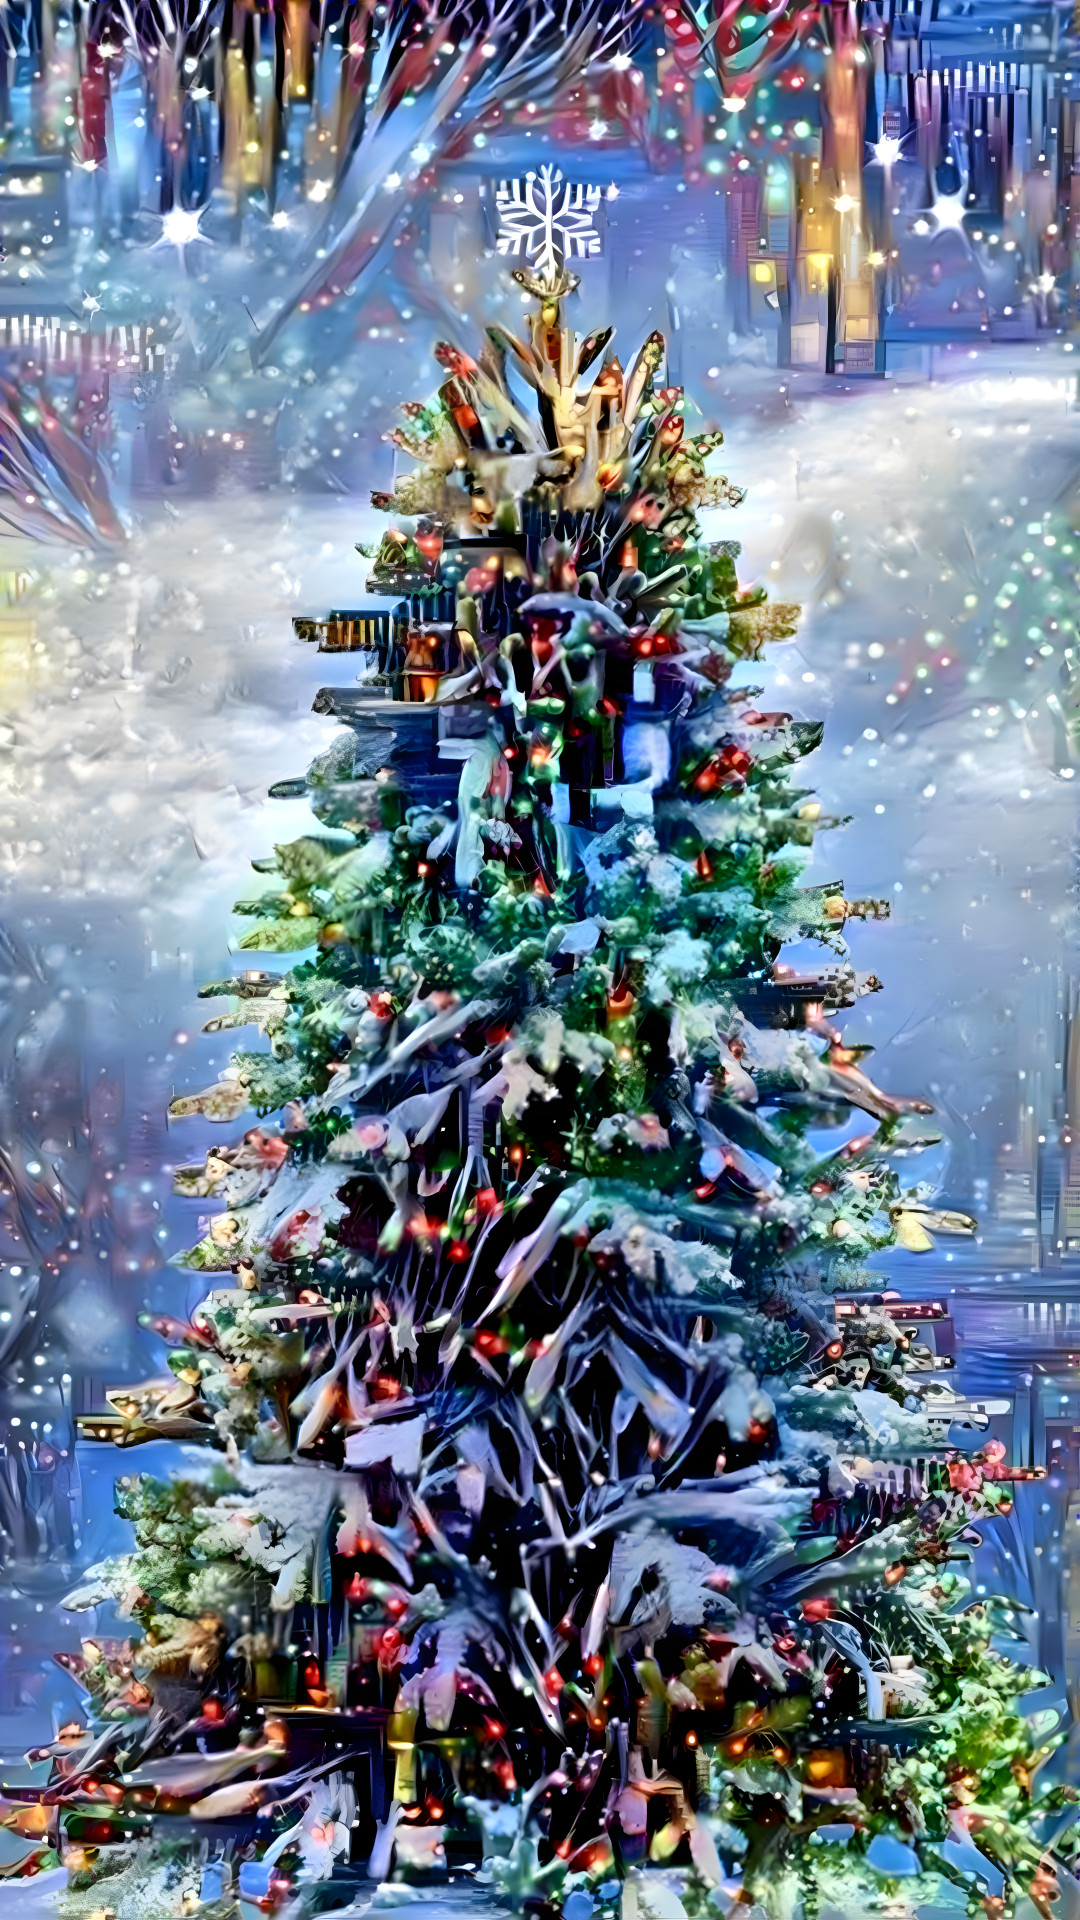 "Oh Christmas Tree"